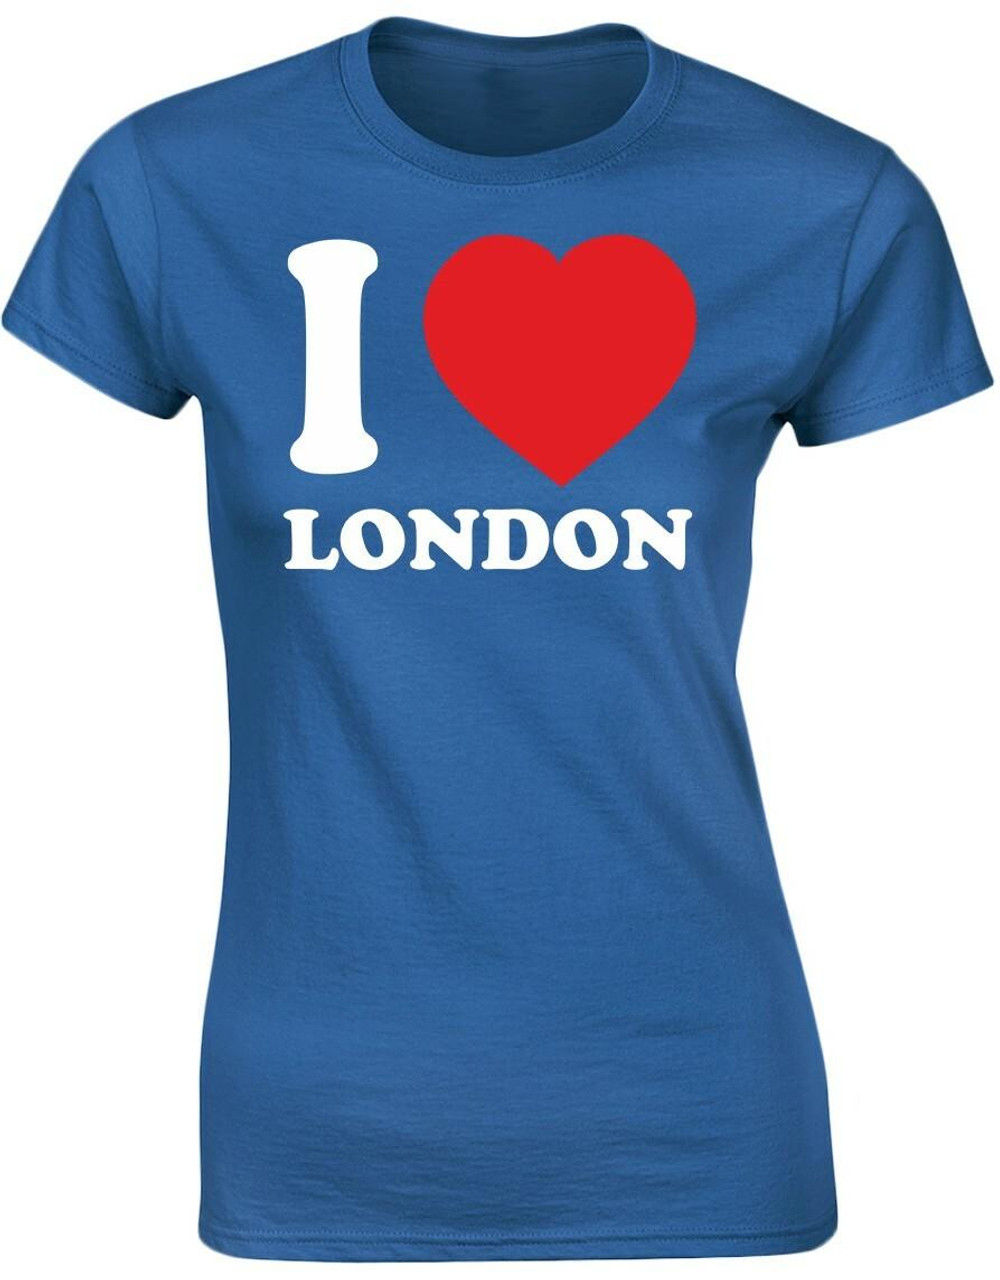 Love London Funny Womens T-Shirt 8 Colours by swagwear - swagwear